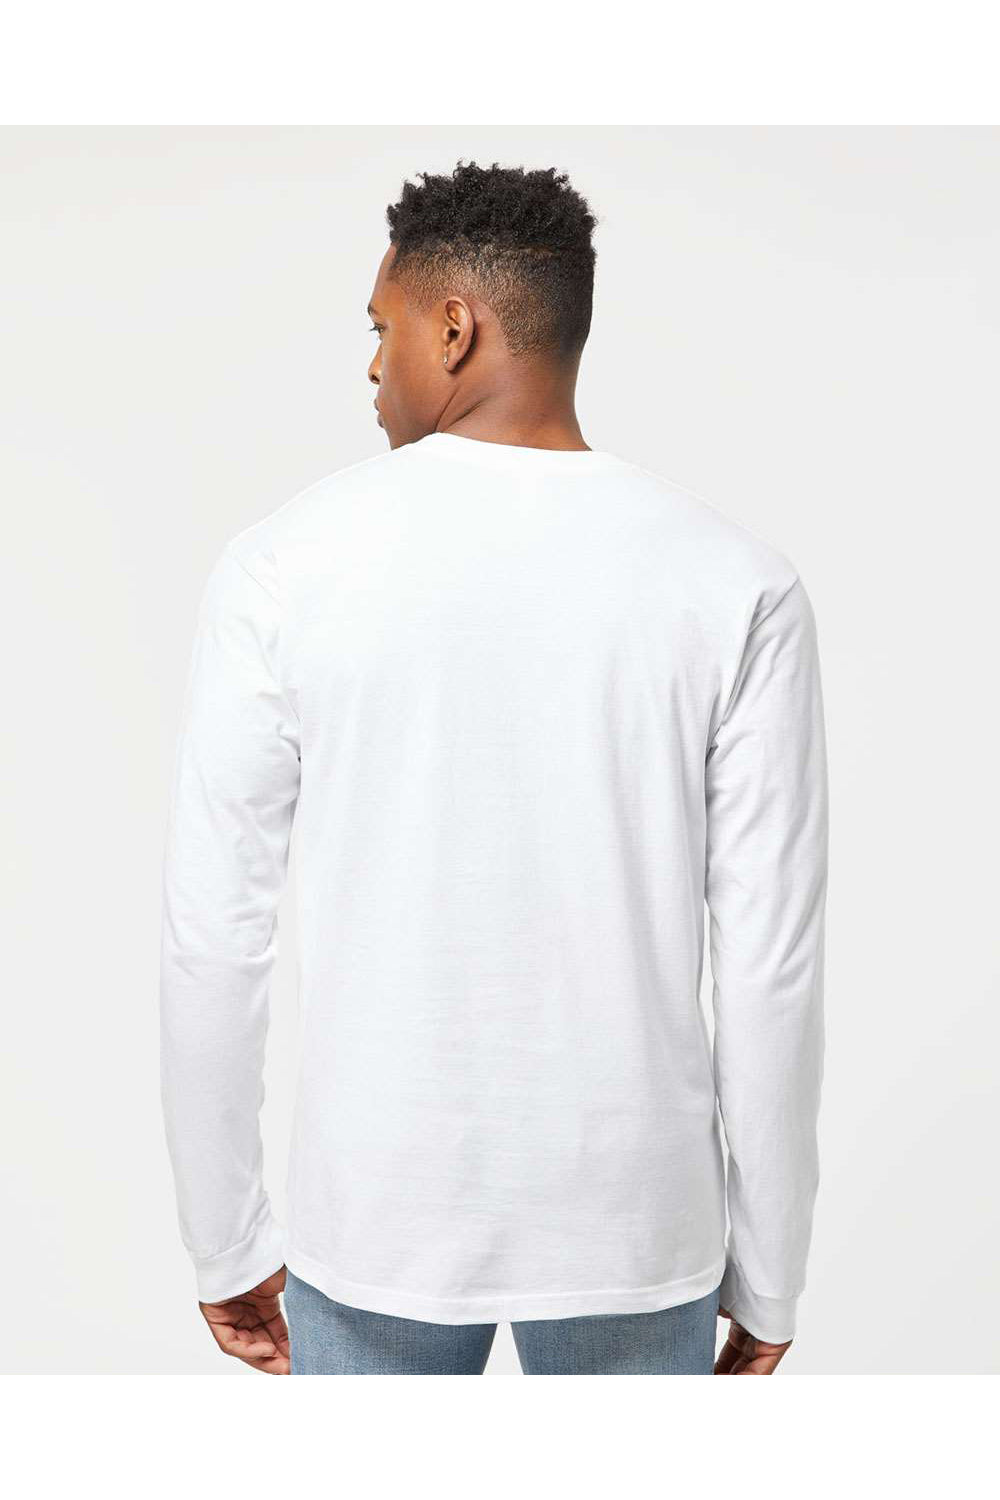 Tultex 291 Mens Jersey Long Sleeve Crewneck T-Shirt White Model Back